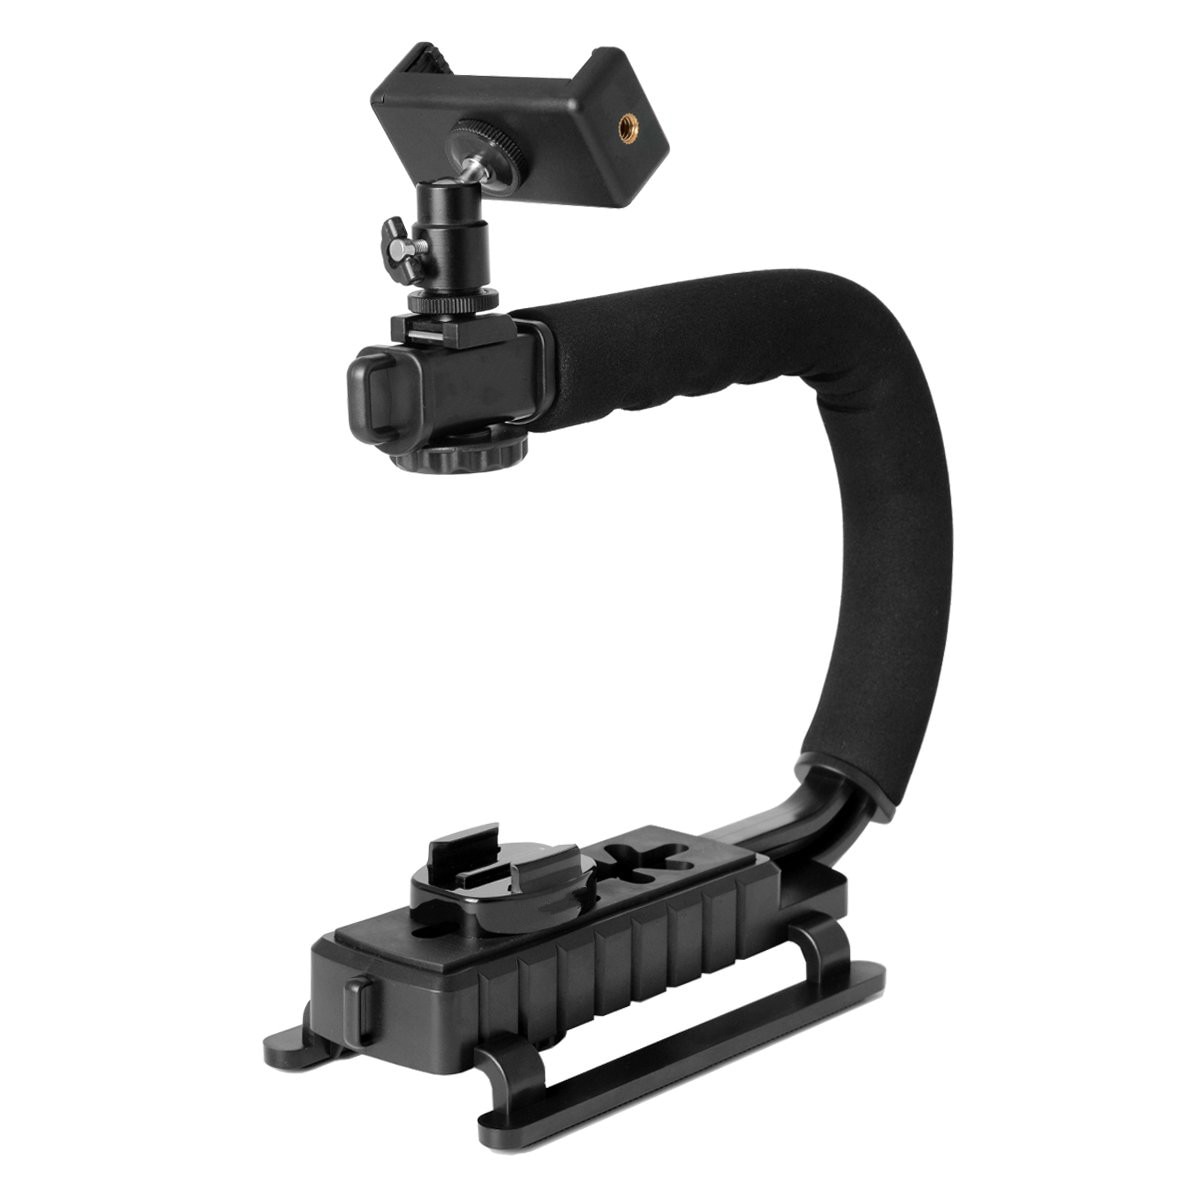 U-Rig Handheld phone Stabilizing Photography Video Rig Film Making Vlogging Recording Case Bracket Stabilizer for iPhone Samsung